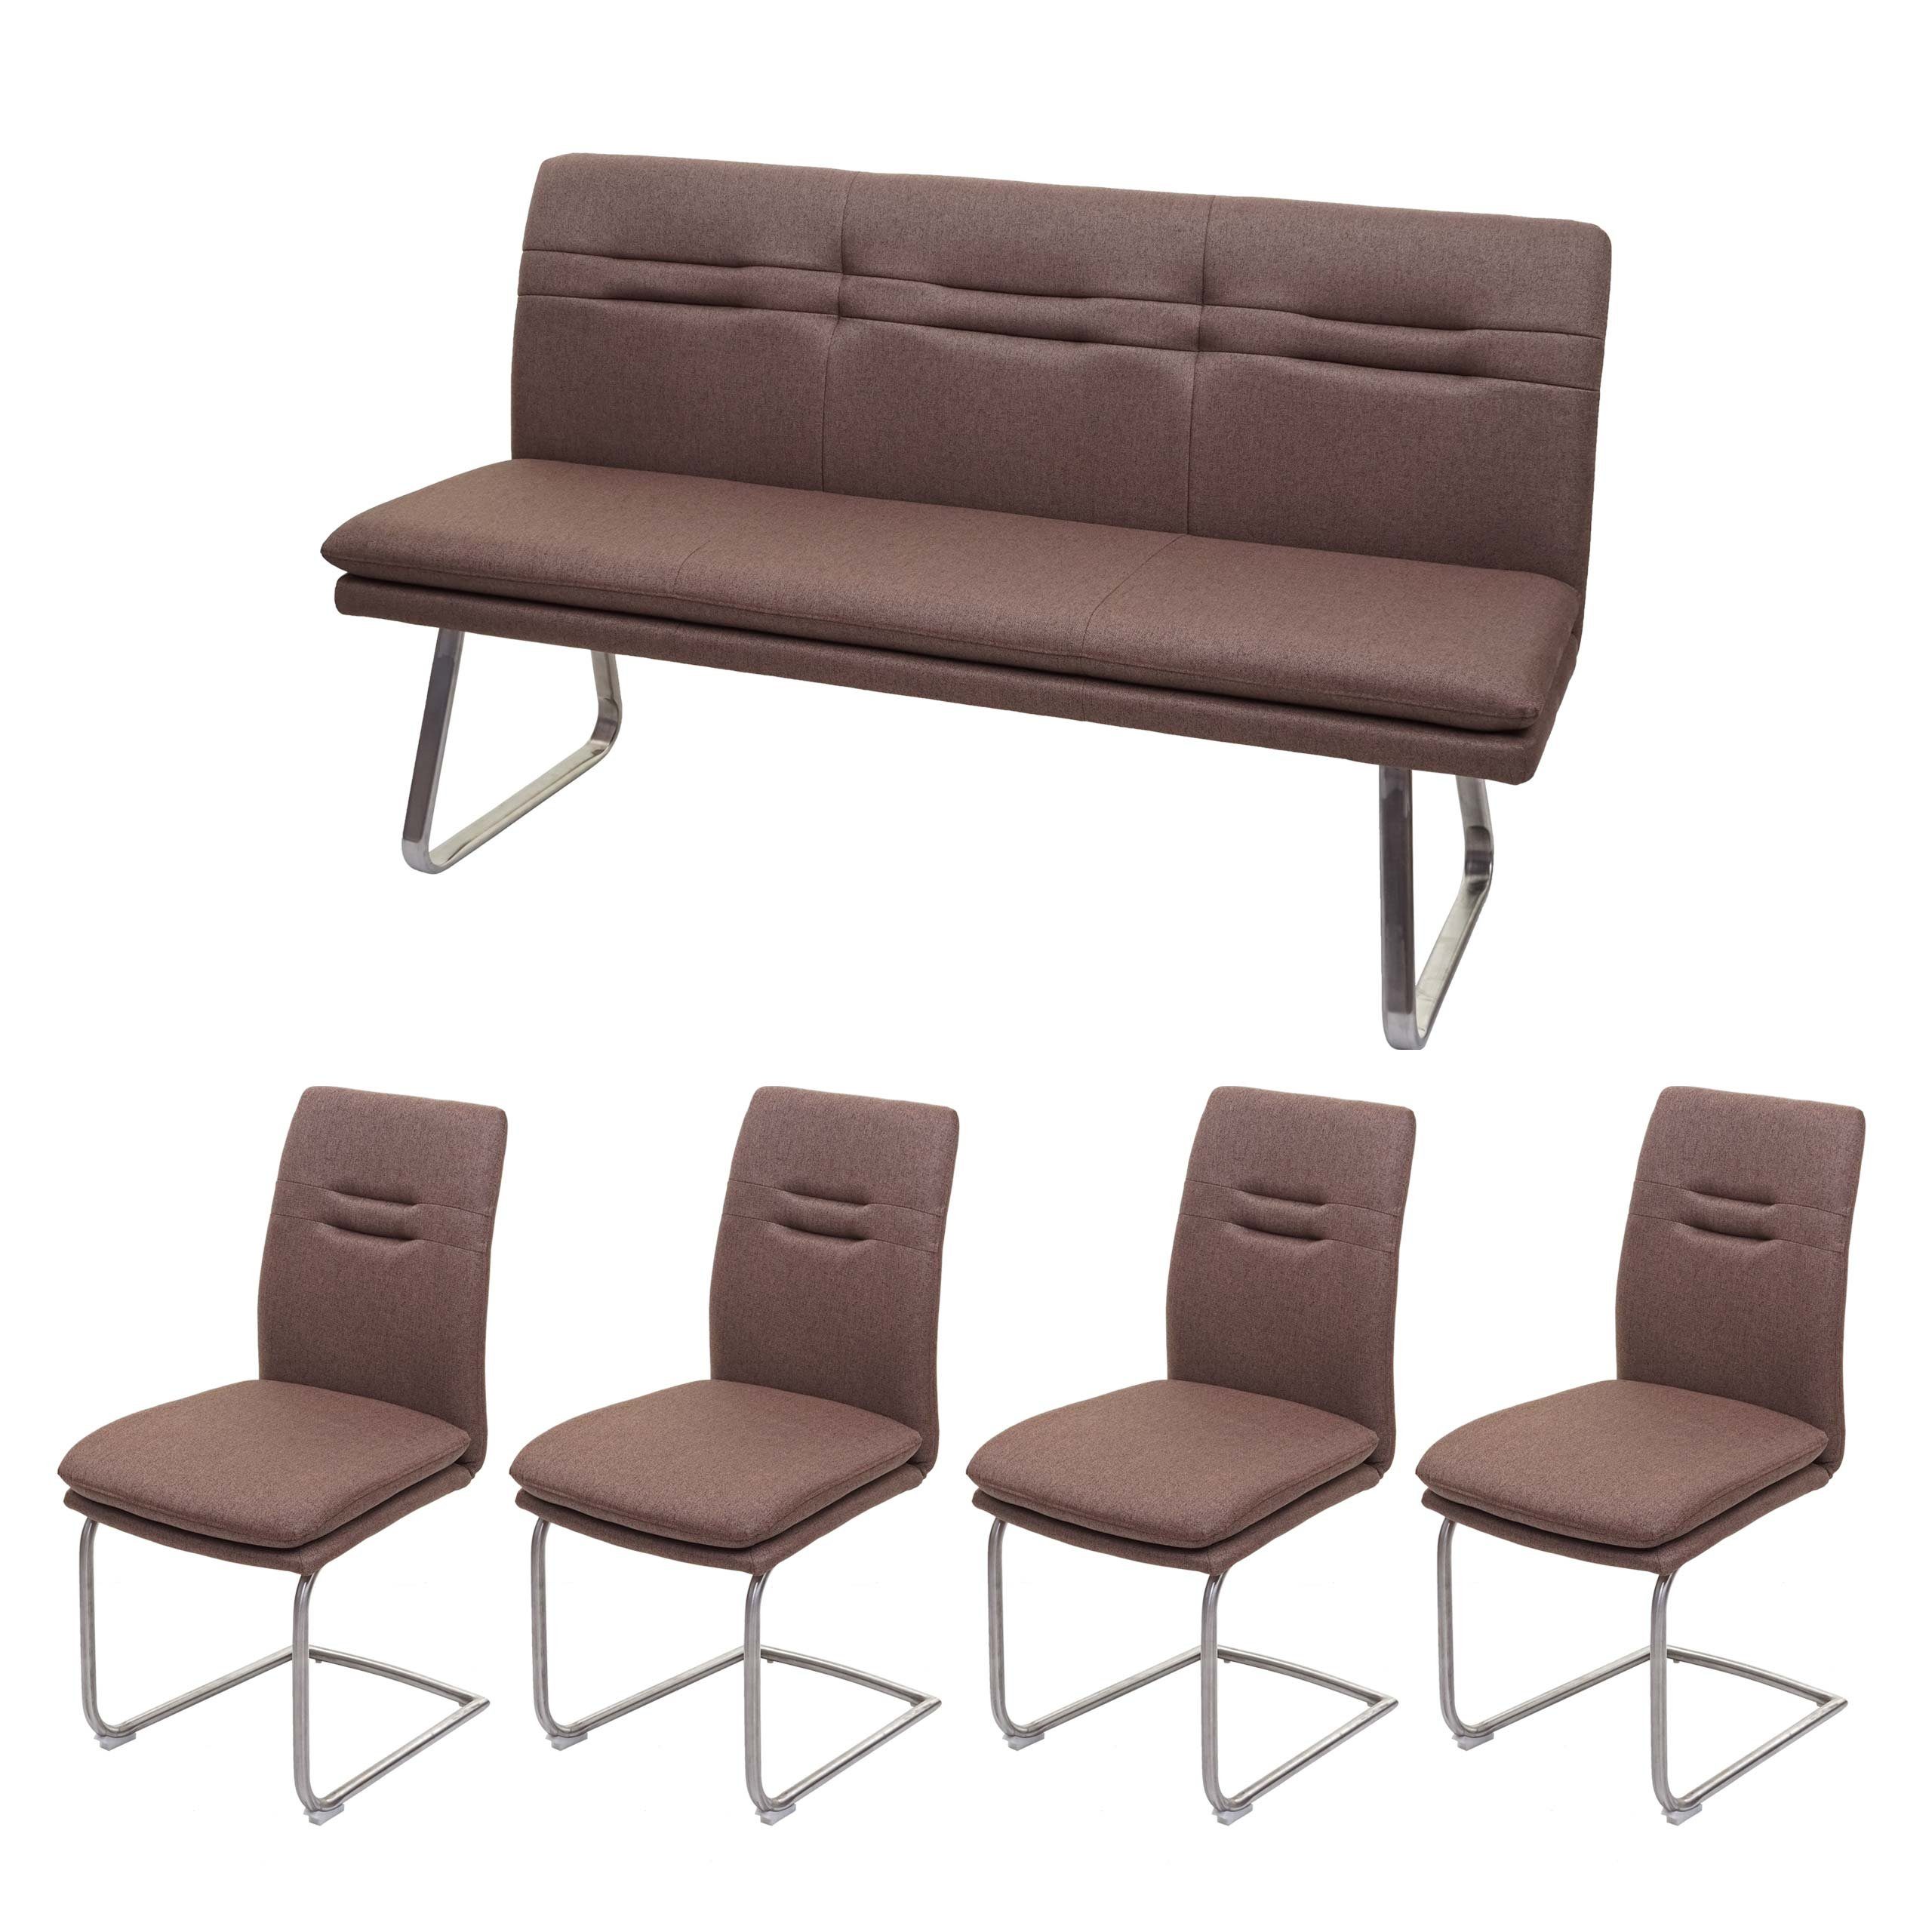 Top-Marke MCW Essgruppe Formgebung, Stühle, Tisch, 4 Bank), MCW-H70-B, Stabiles Gestell 5-tlg., braun 1 (Set, 1 Bequeme